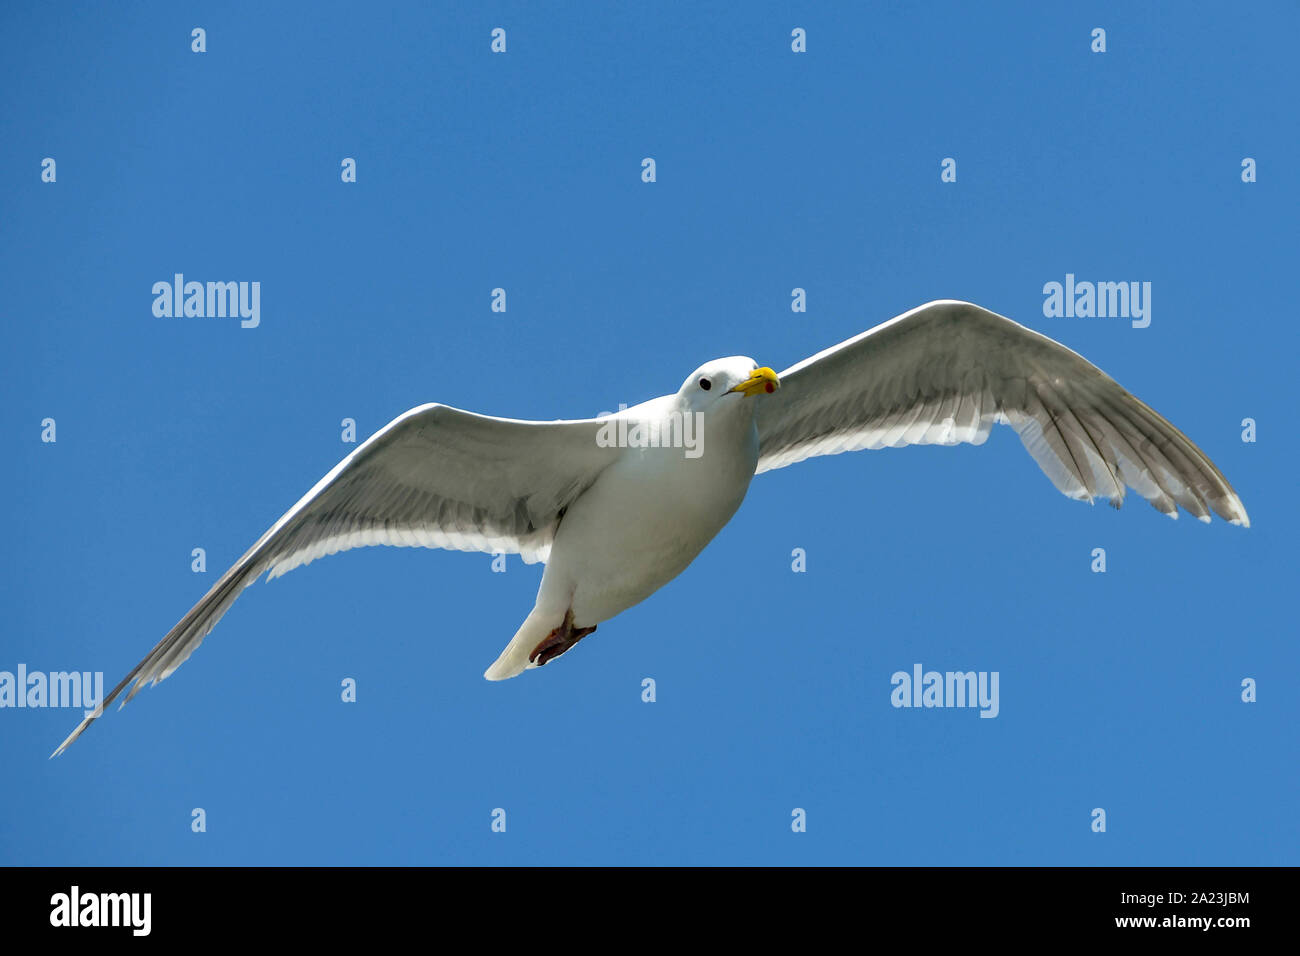 Gran Gaviota en vuelo aislado contra un cielo azul profundo con espacio para copiar Foto de stock